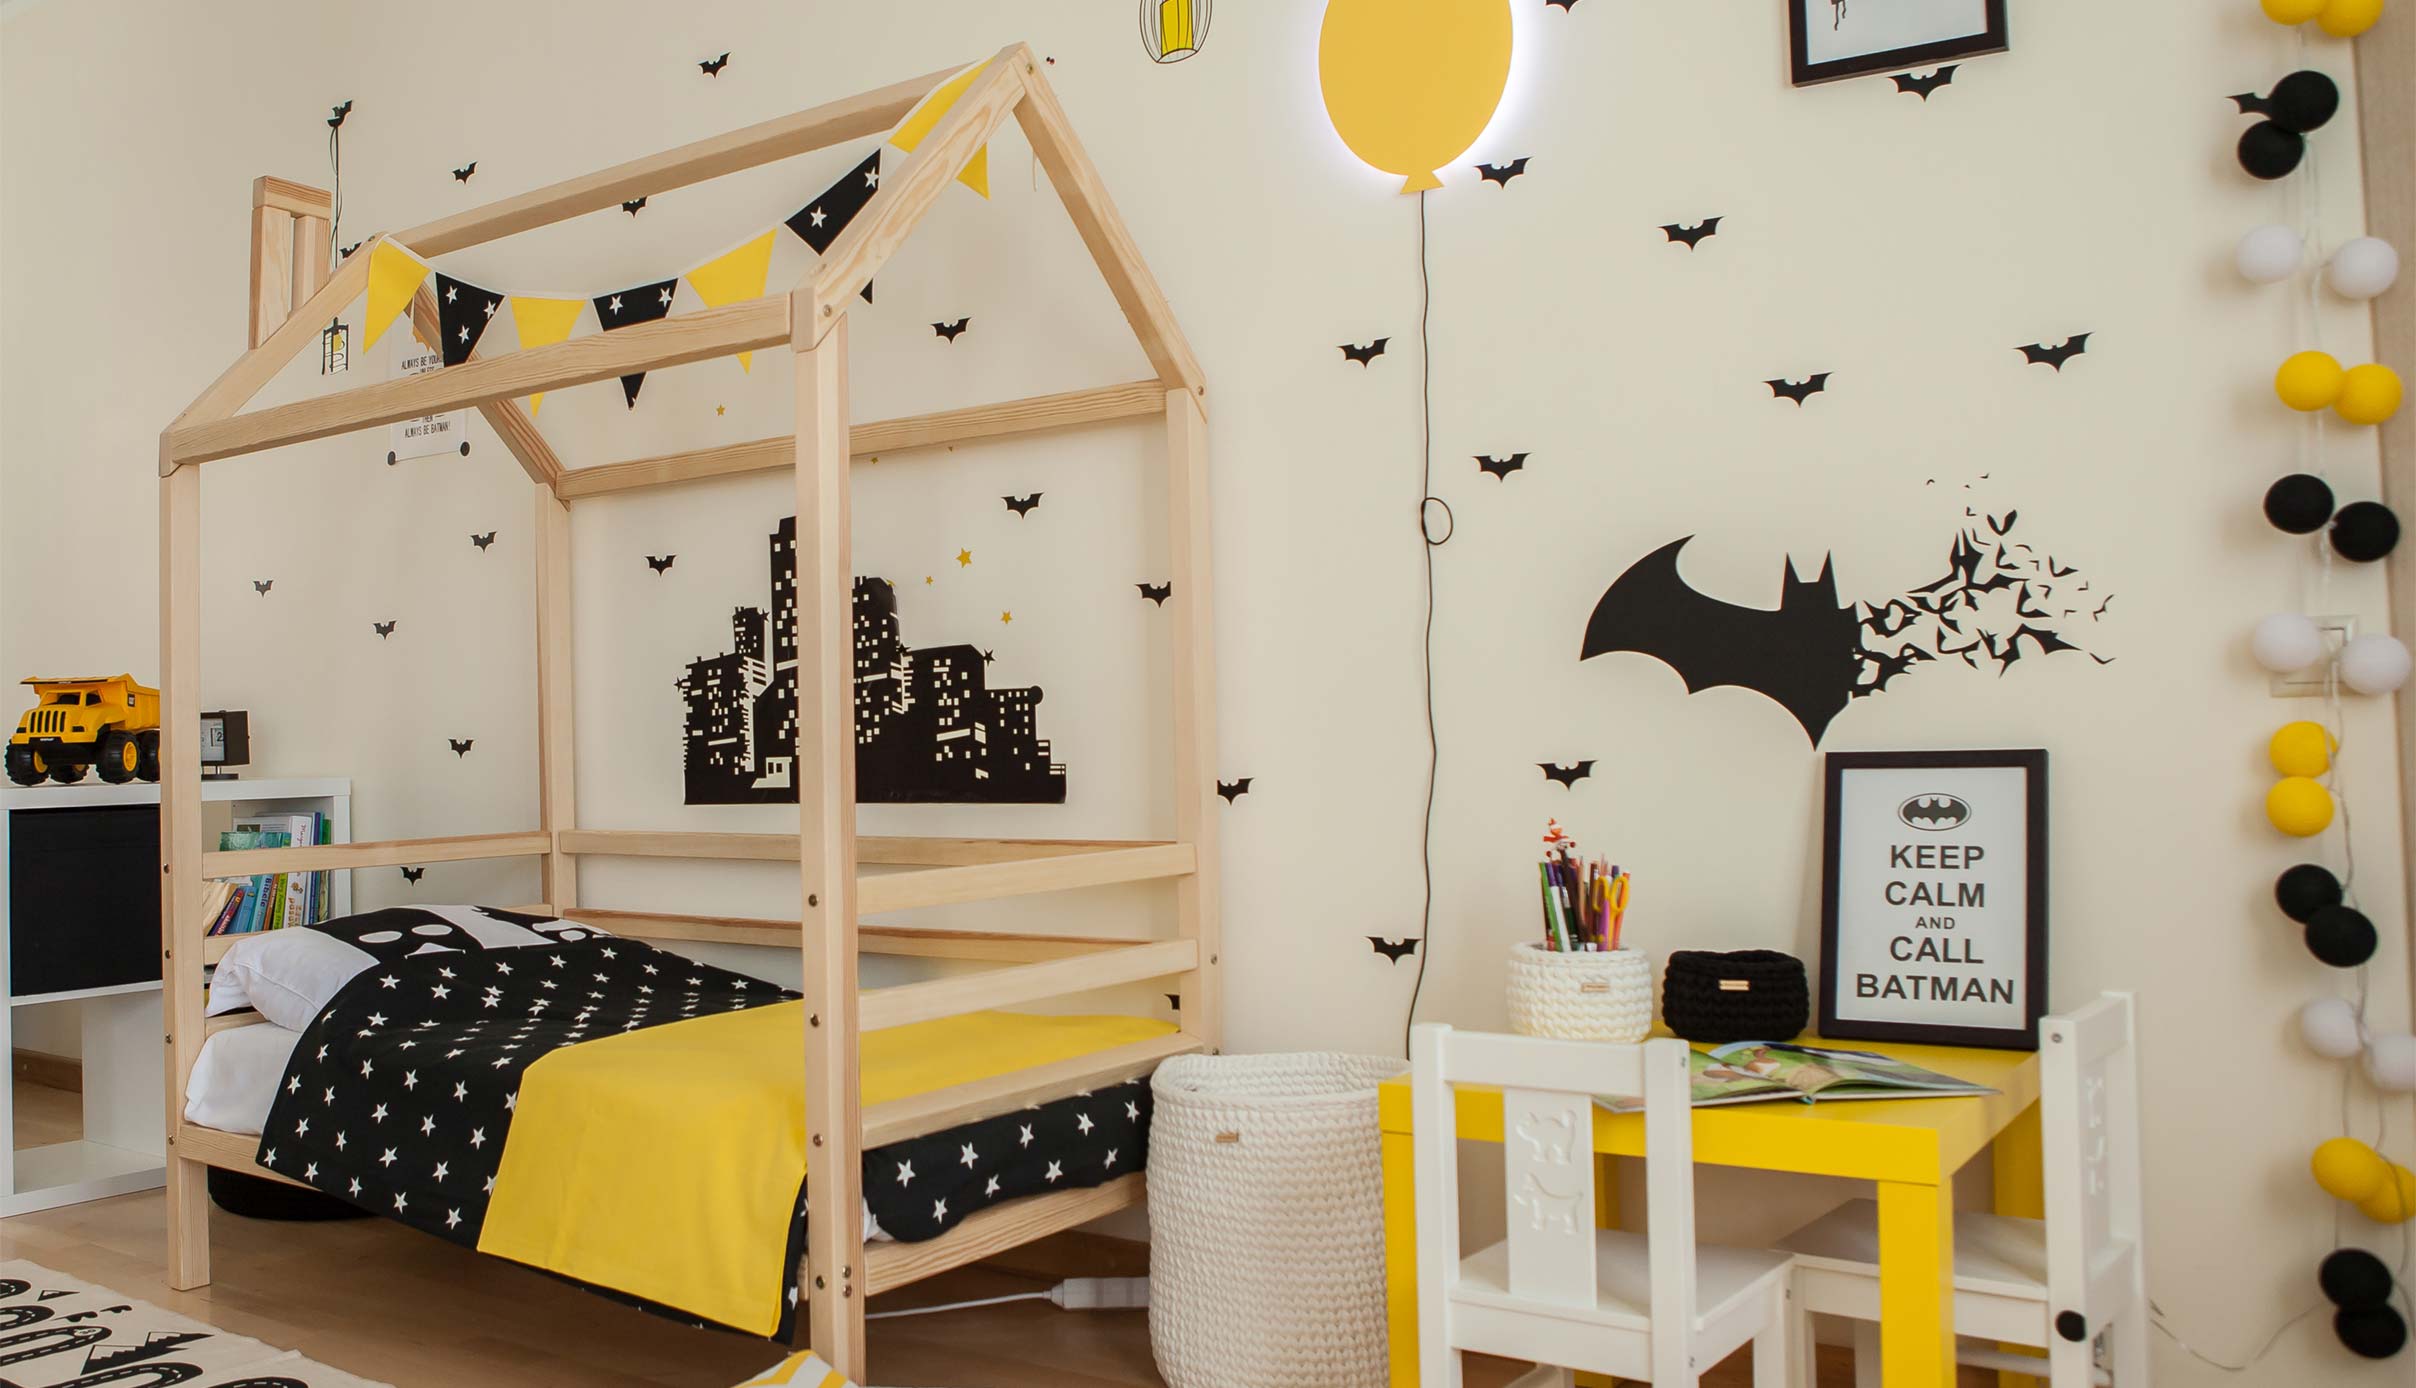 A boy's bedroom with a batman theme.